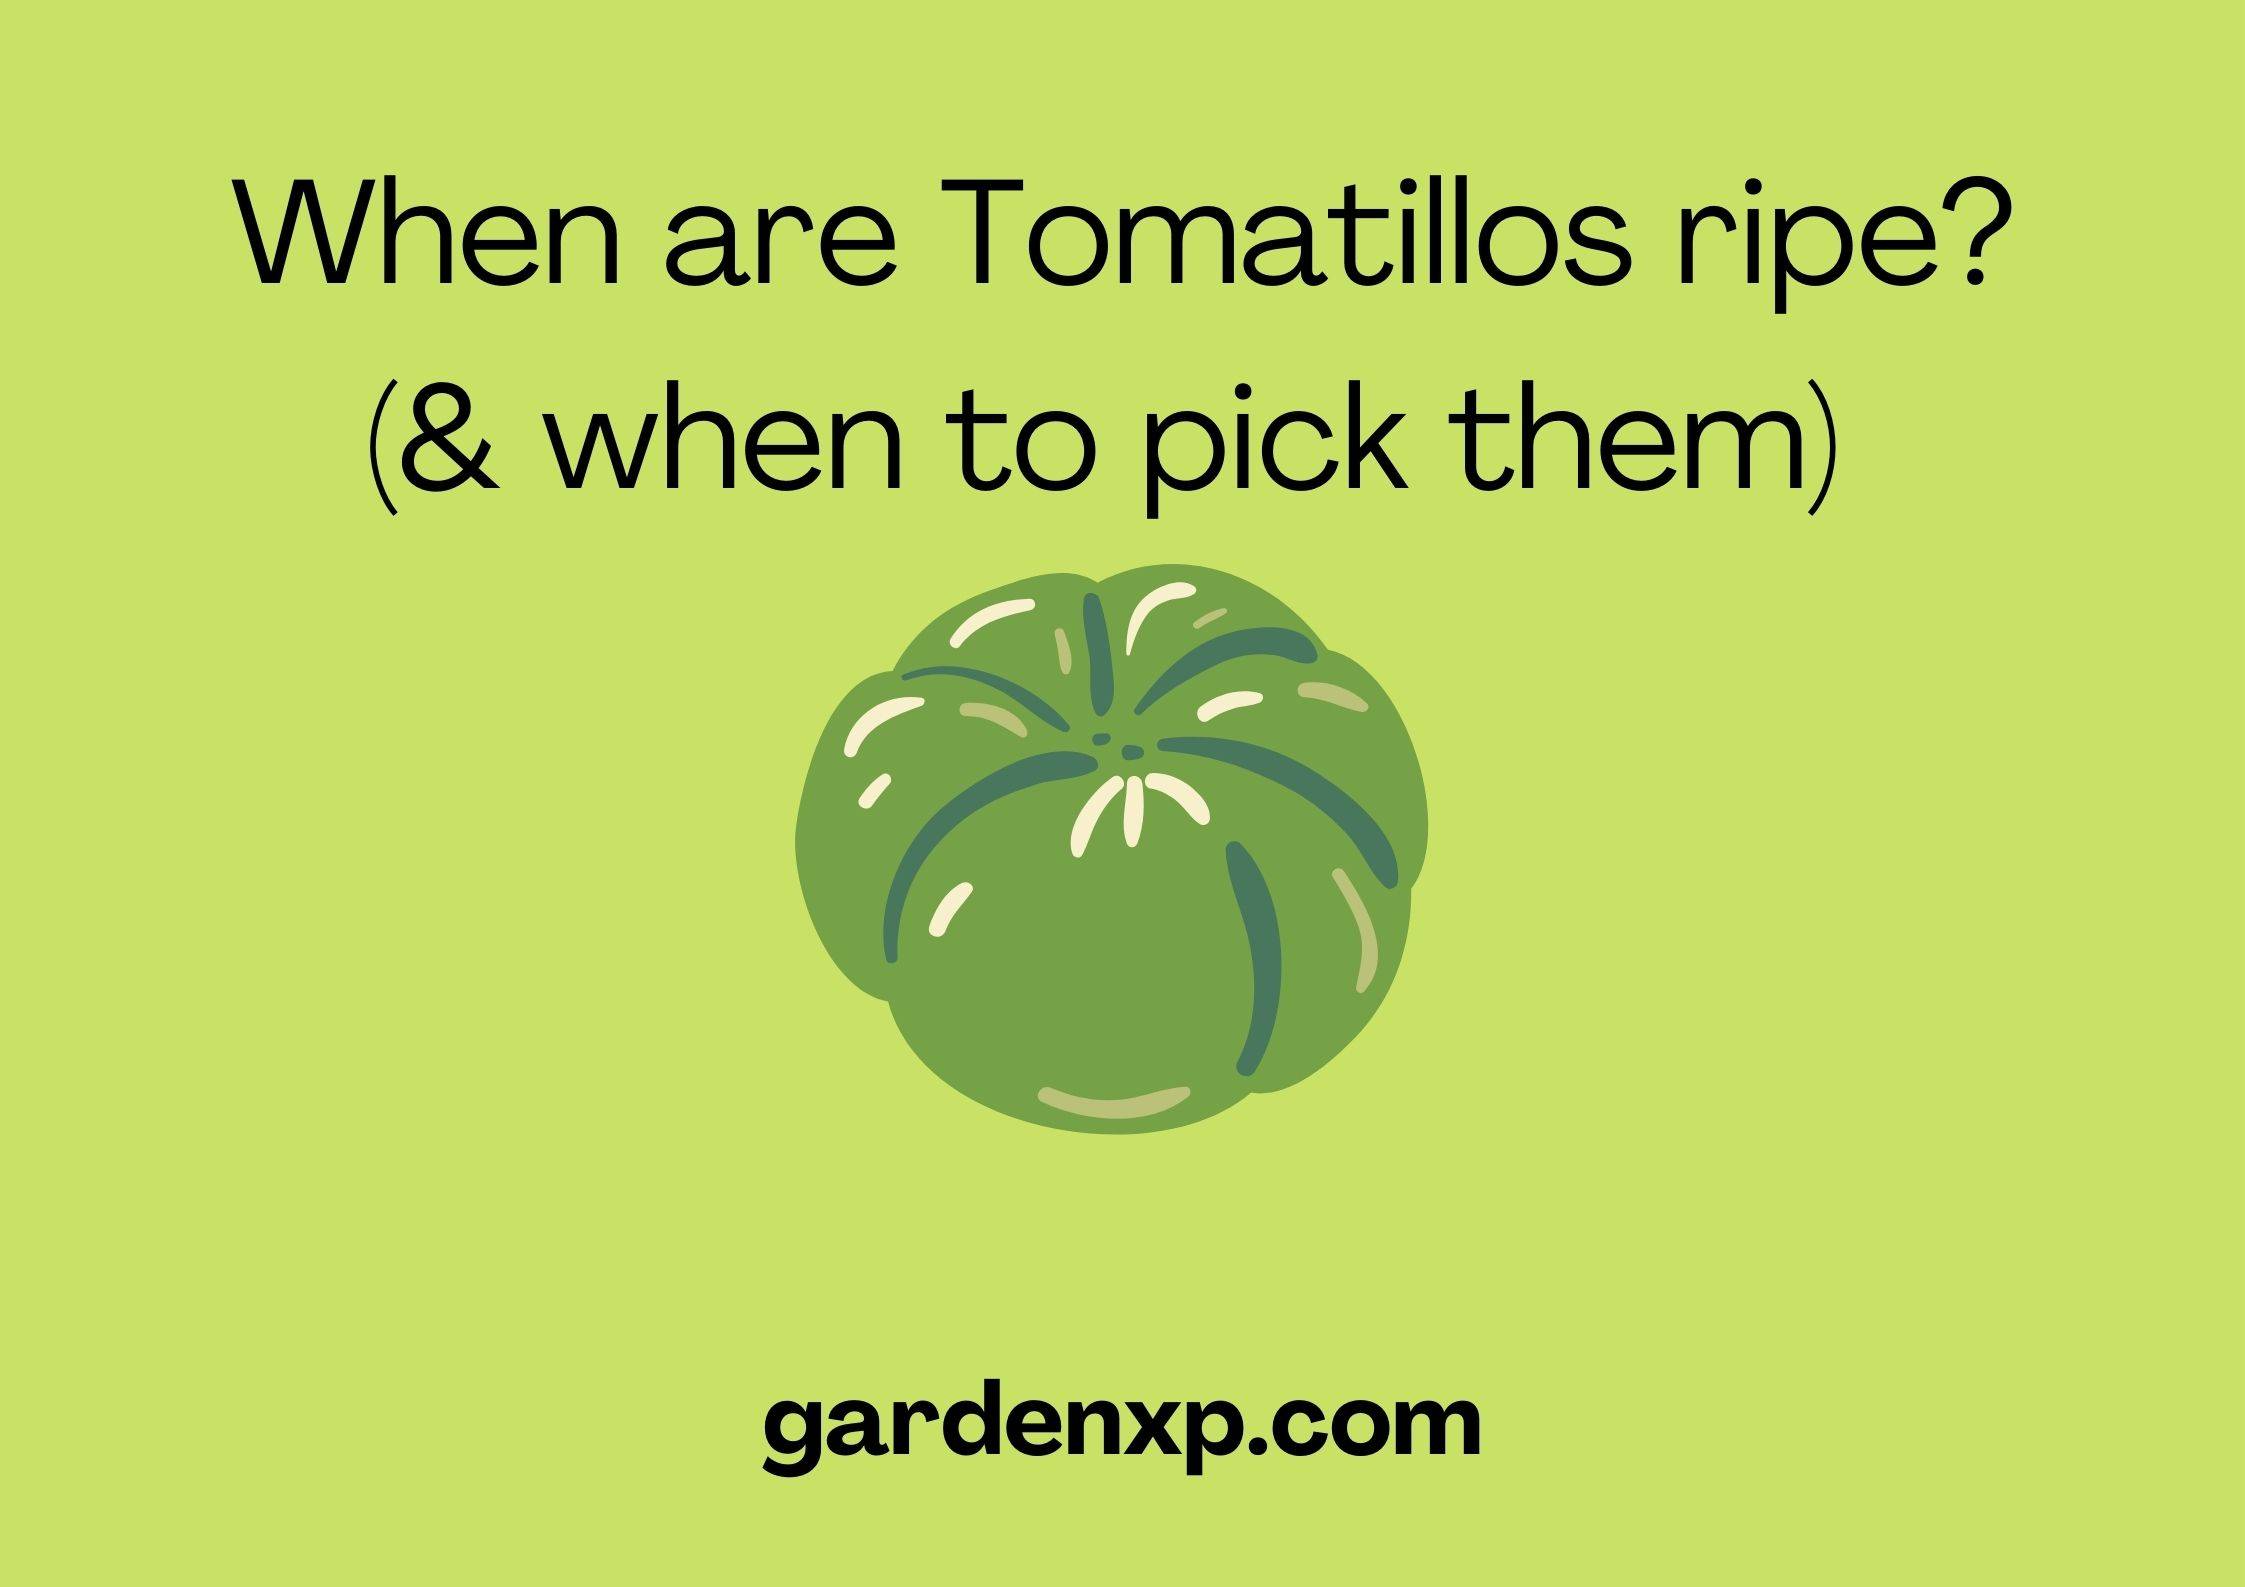 When are Tomatillos ripe? (& when to pick them) 